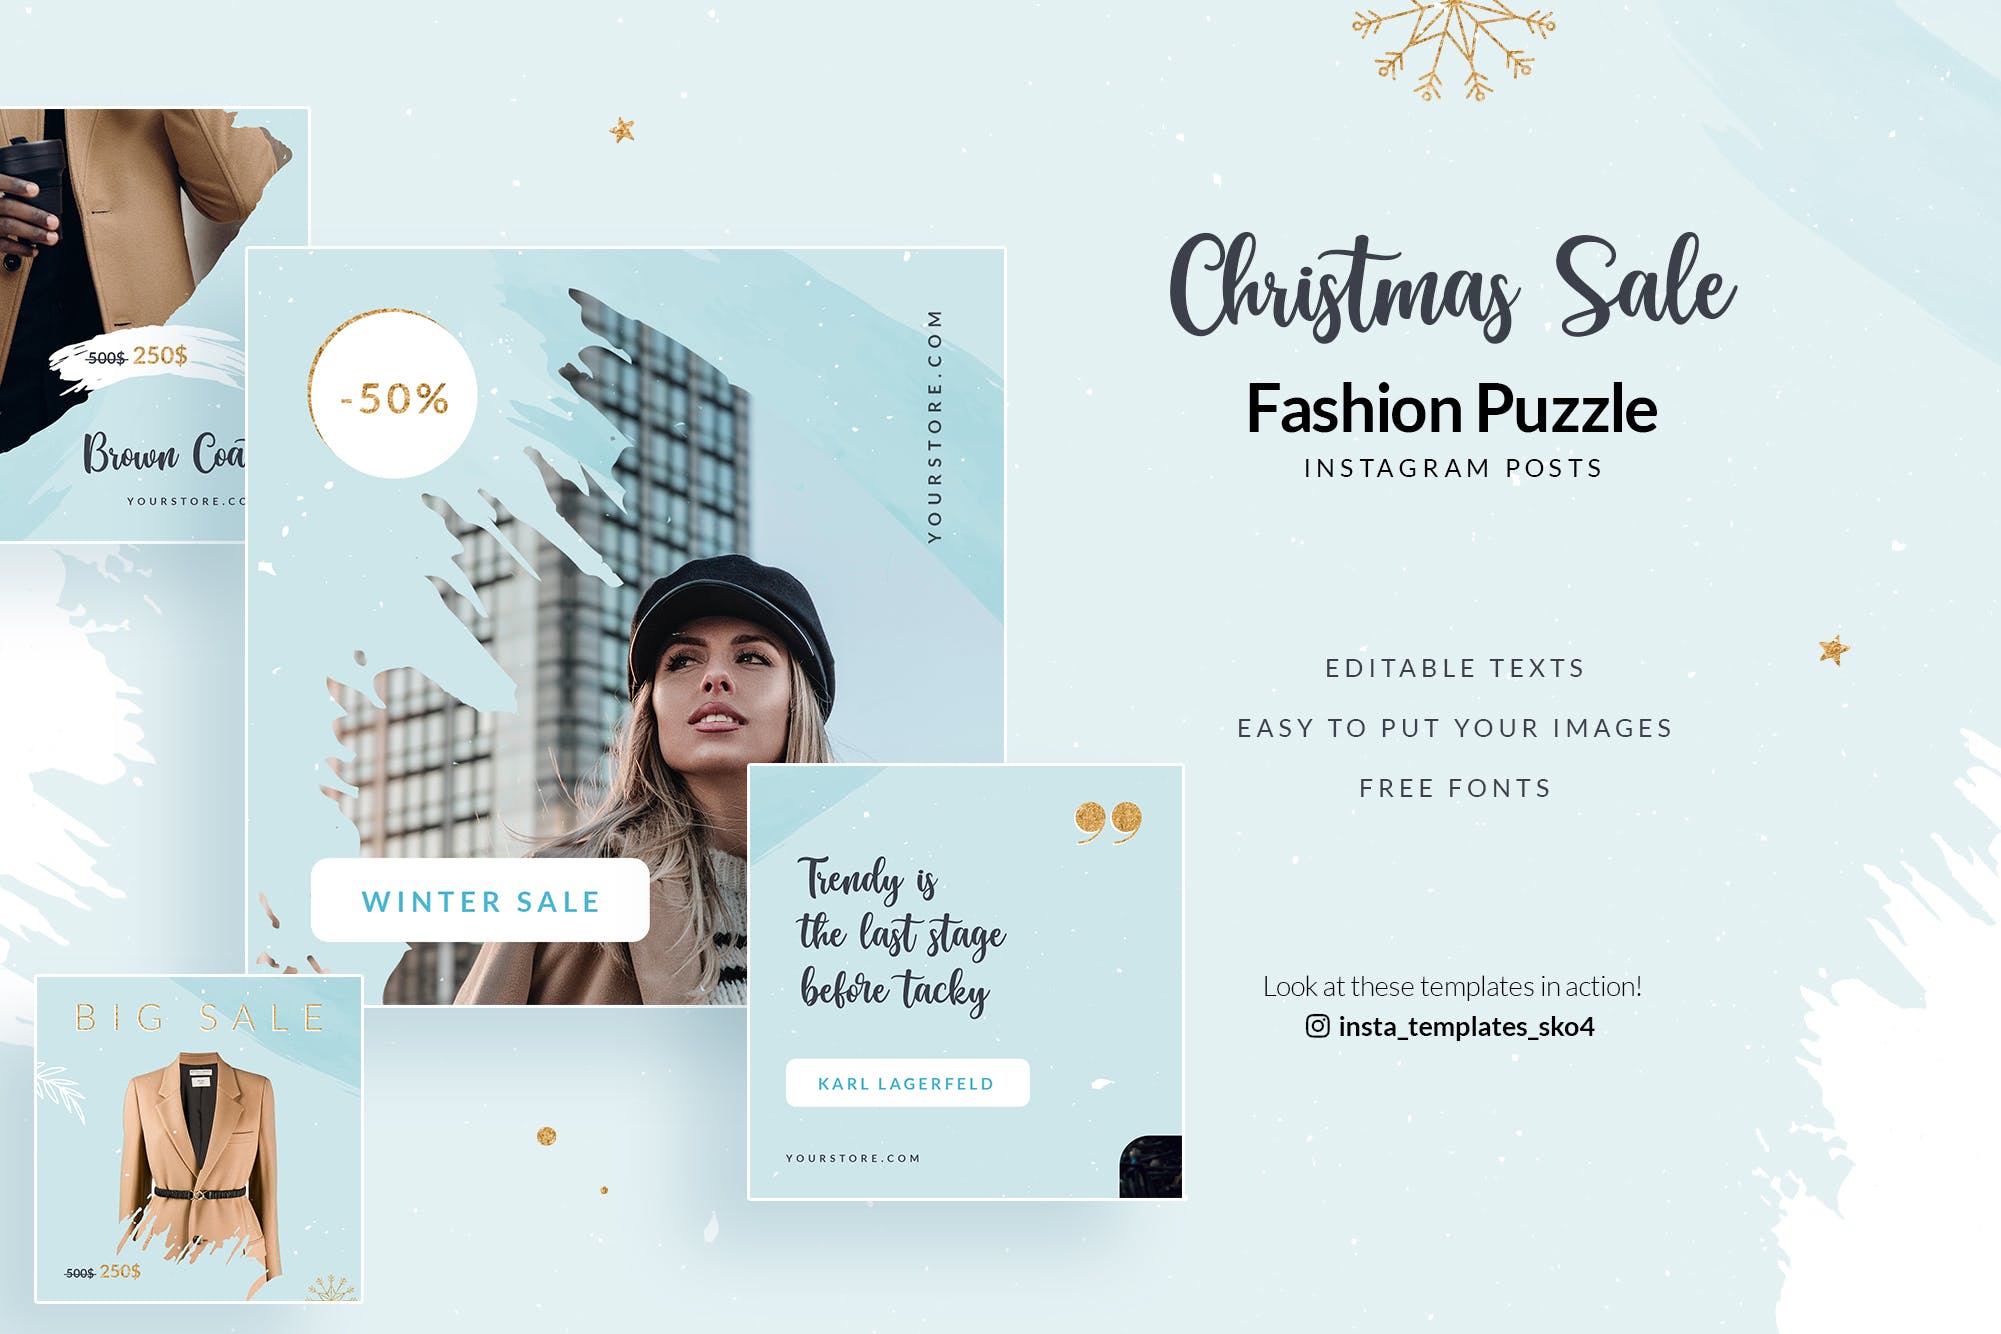 圣诞节时尚促销广告Instagram拼图风格设计模板素材库精选 Christmas Fashion Sale – Instagram Puzzle插图(2)